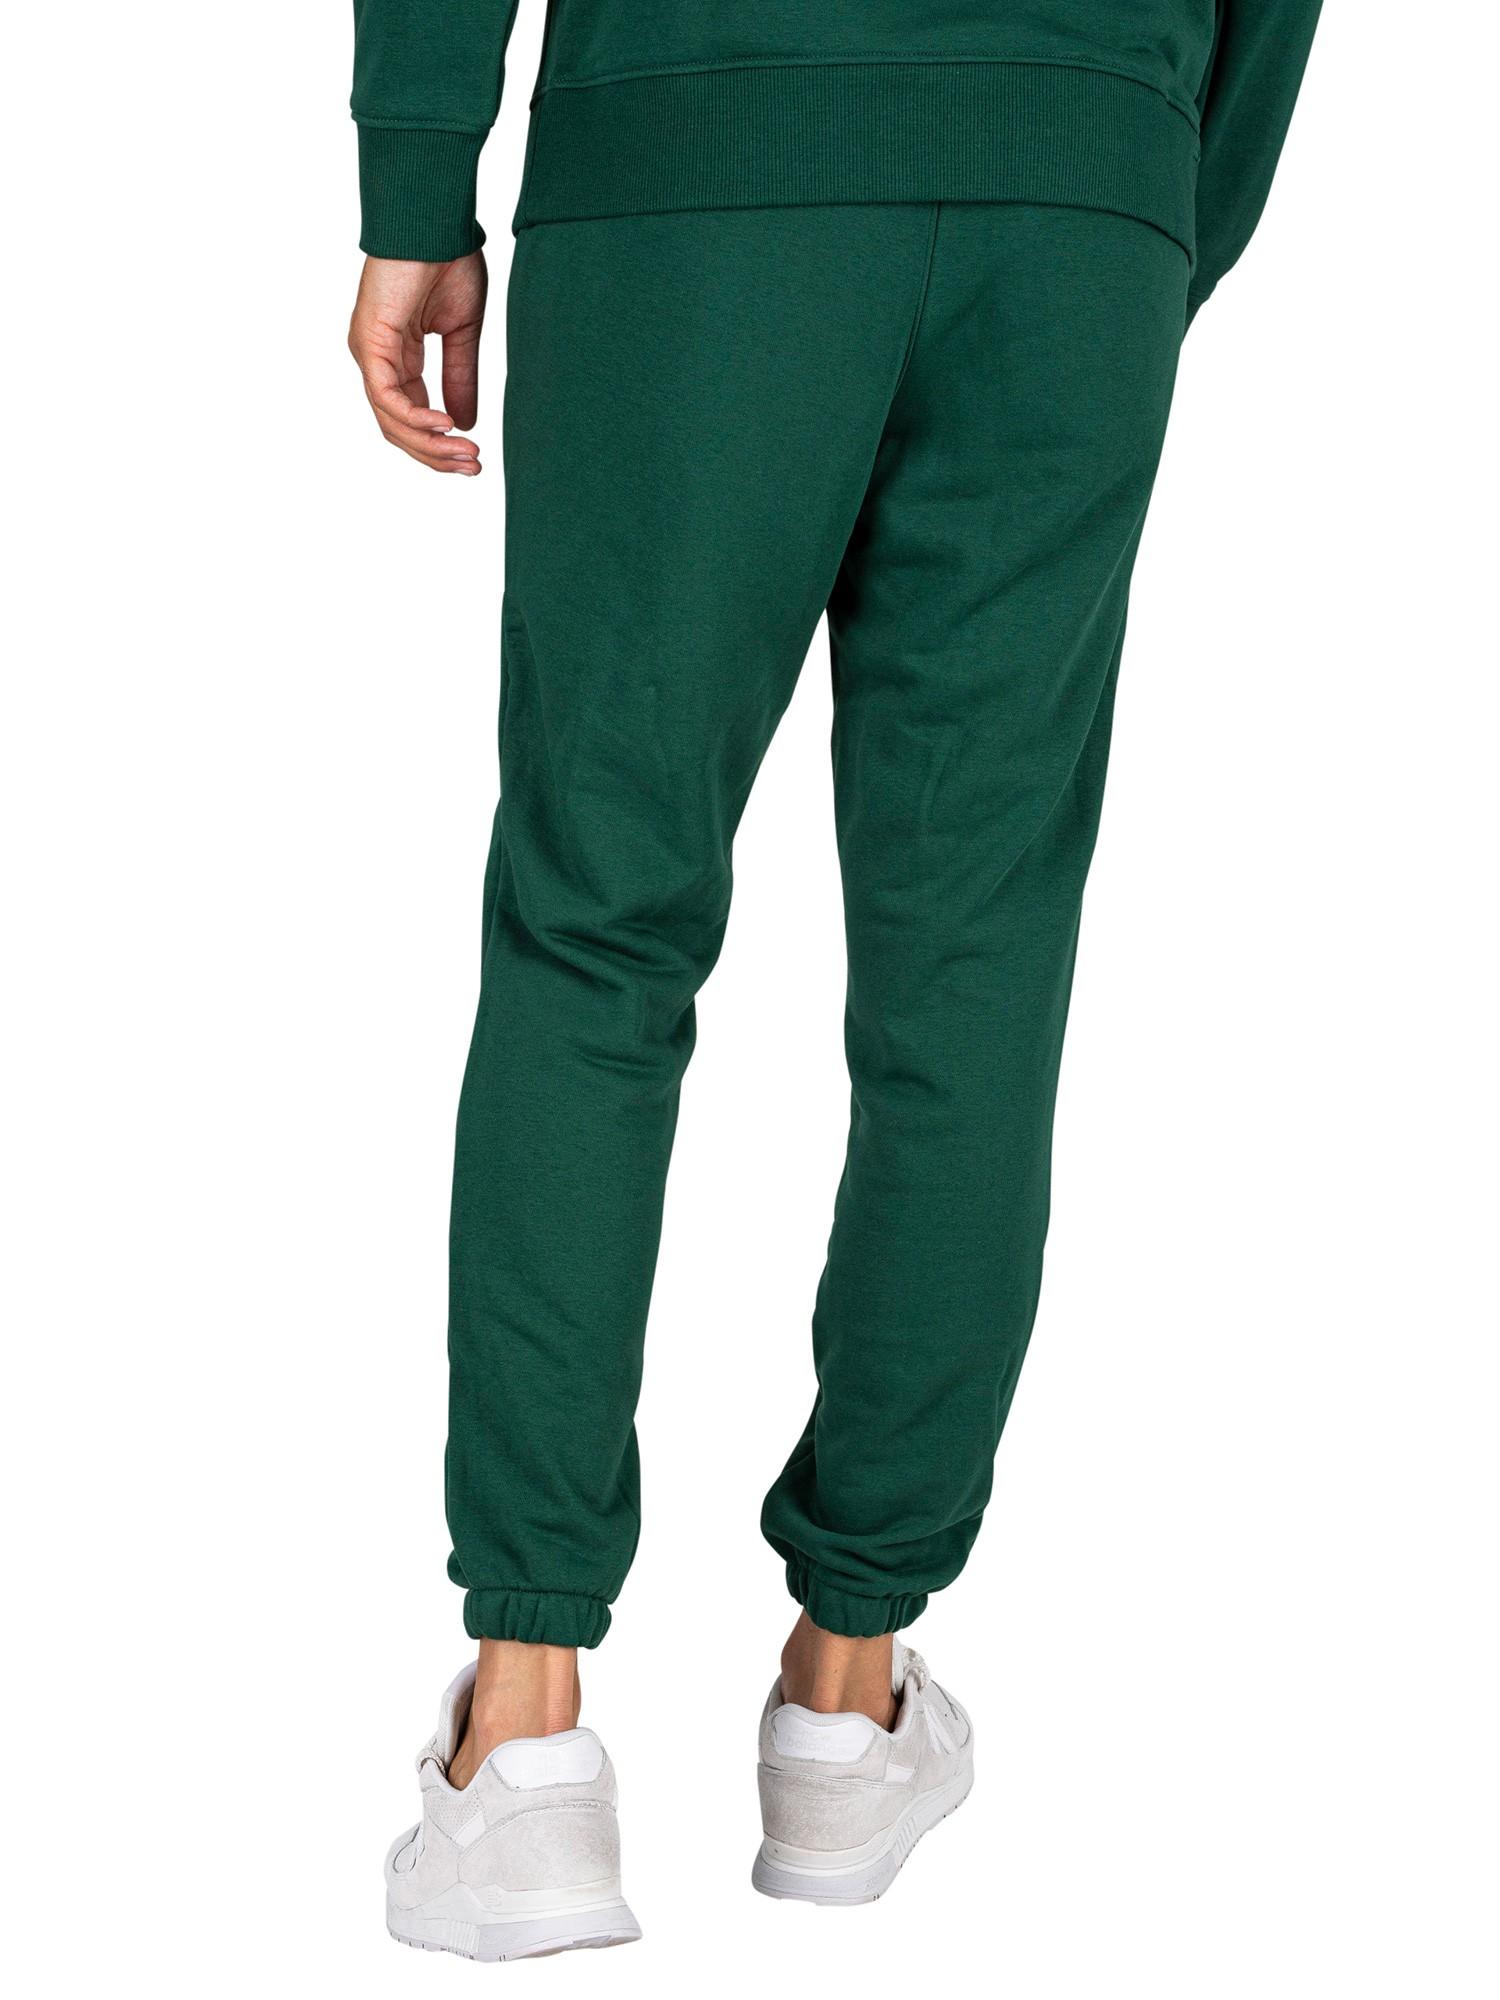 Relaxed Fit Sweatpants - Dark green/New Future - Men